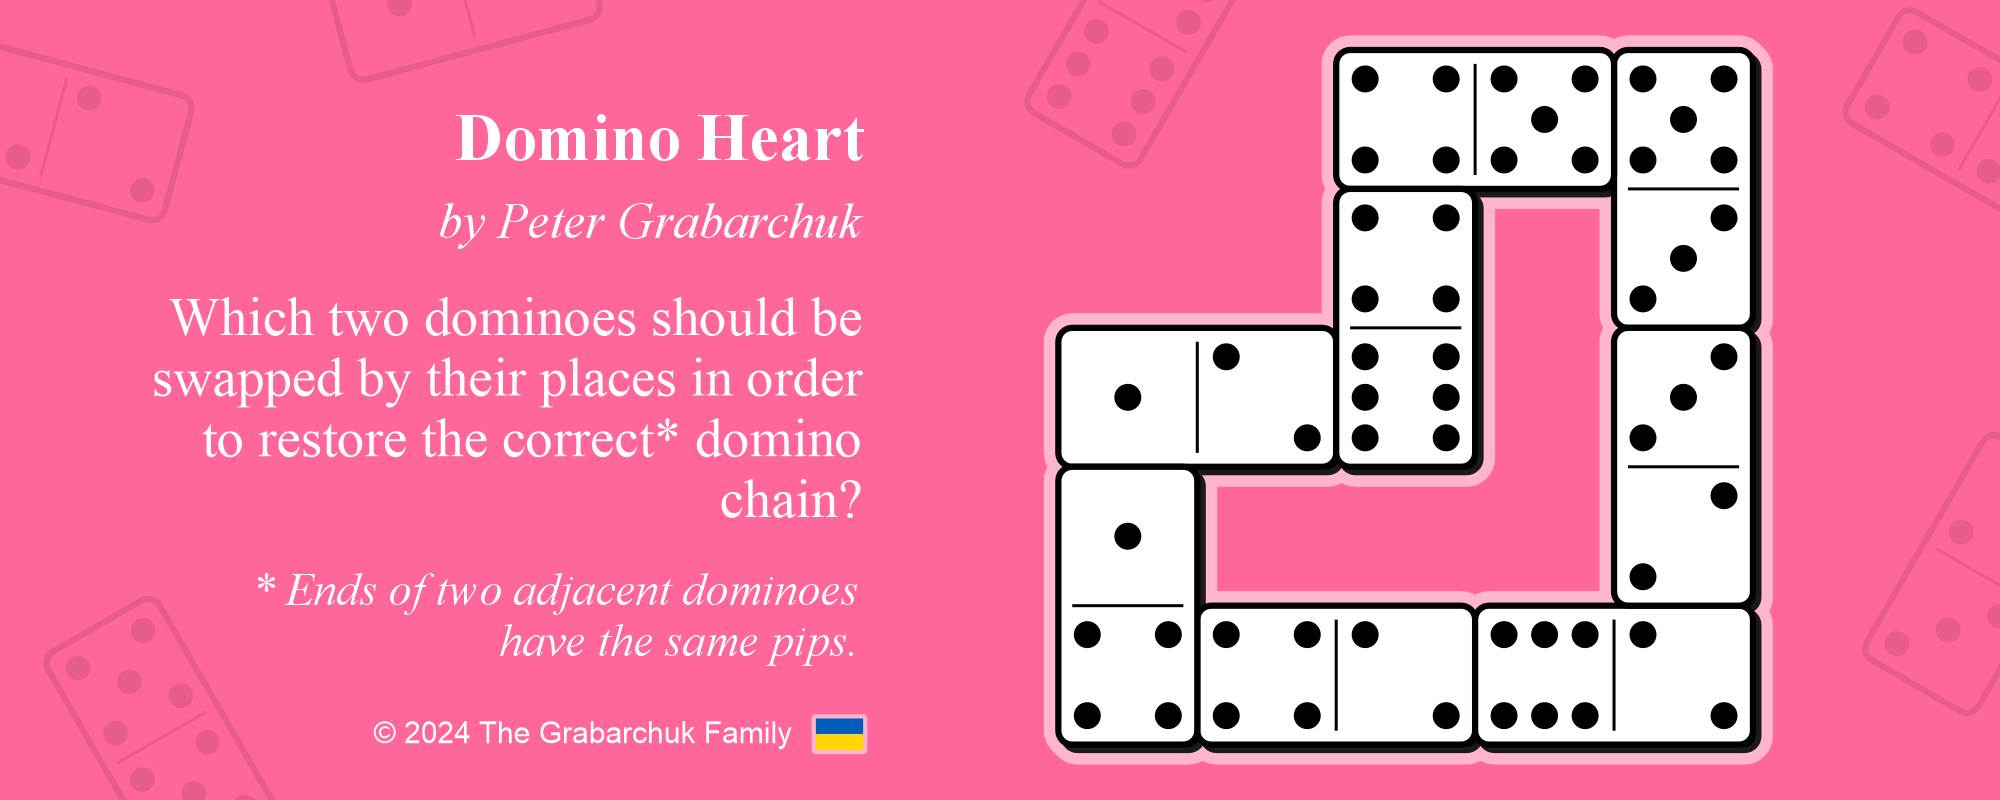 Domino Heart by Peter Grabarchuk